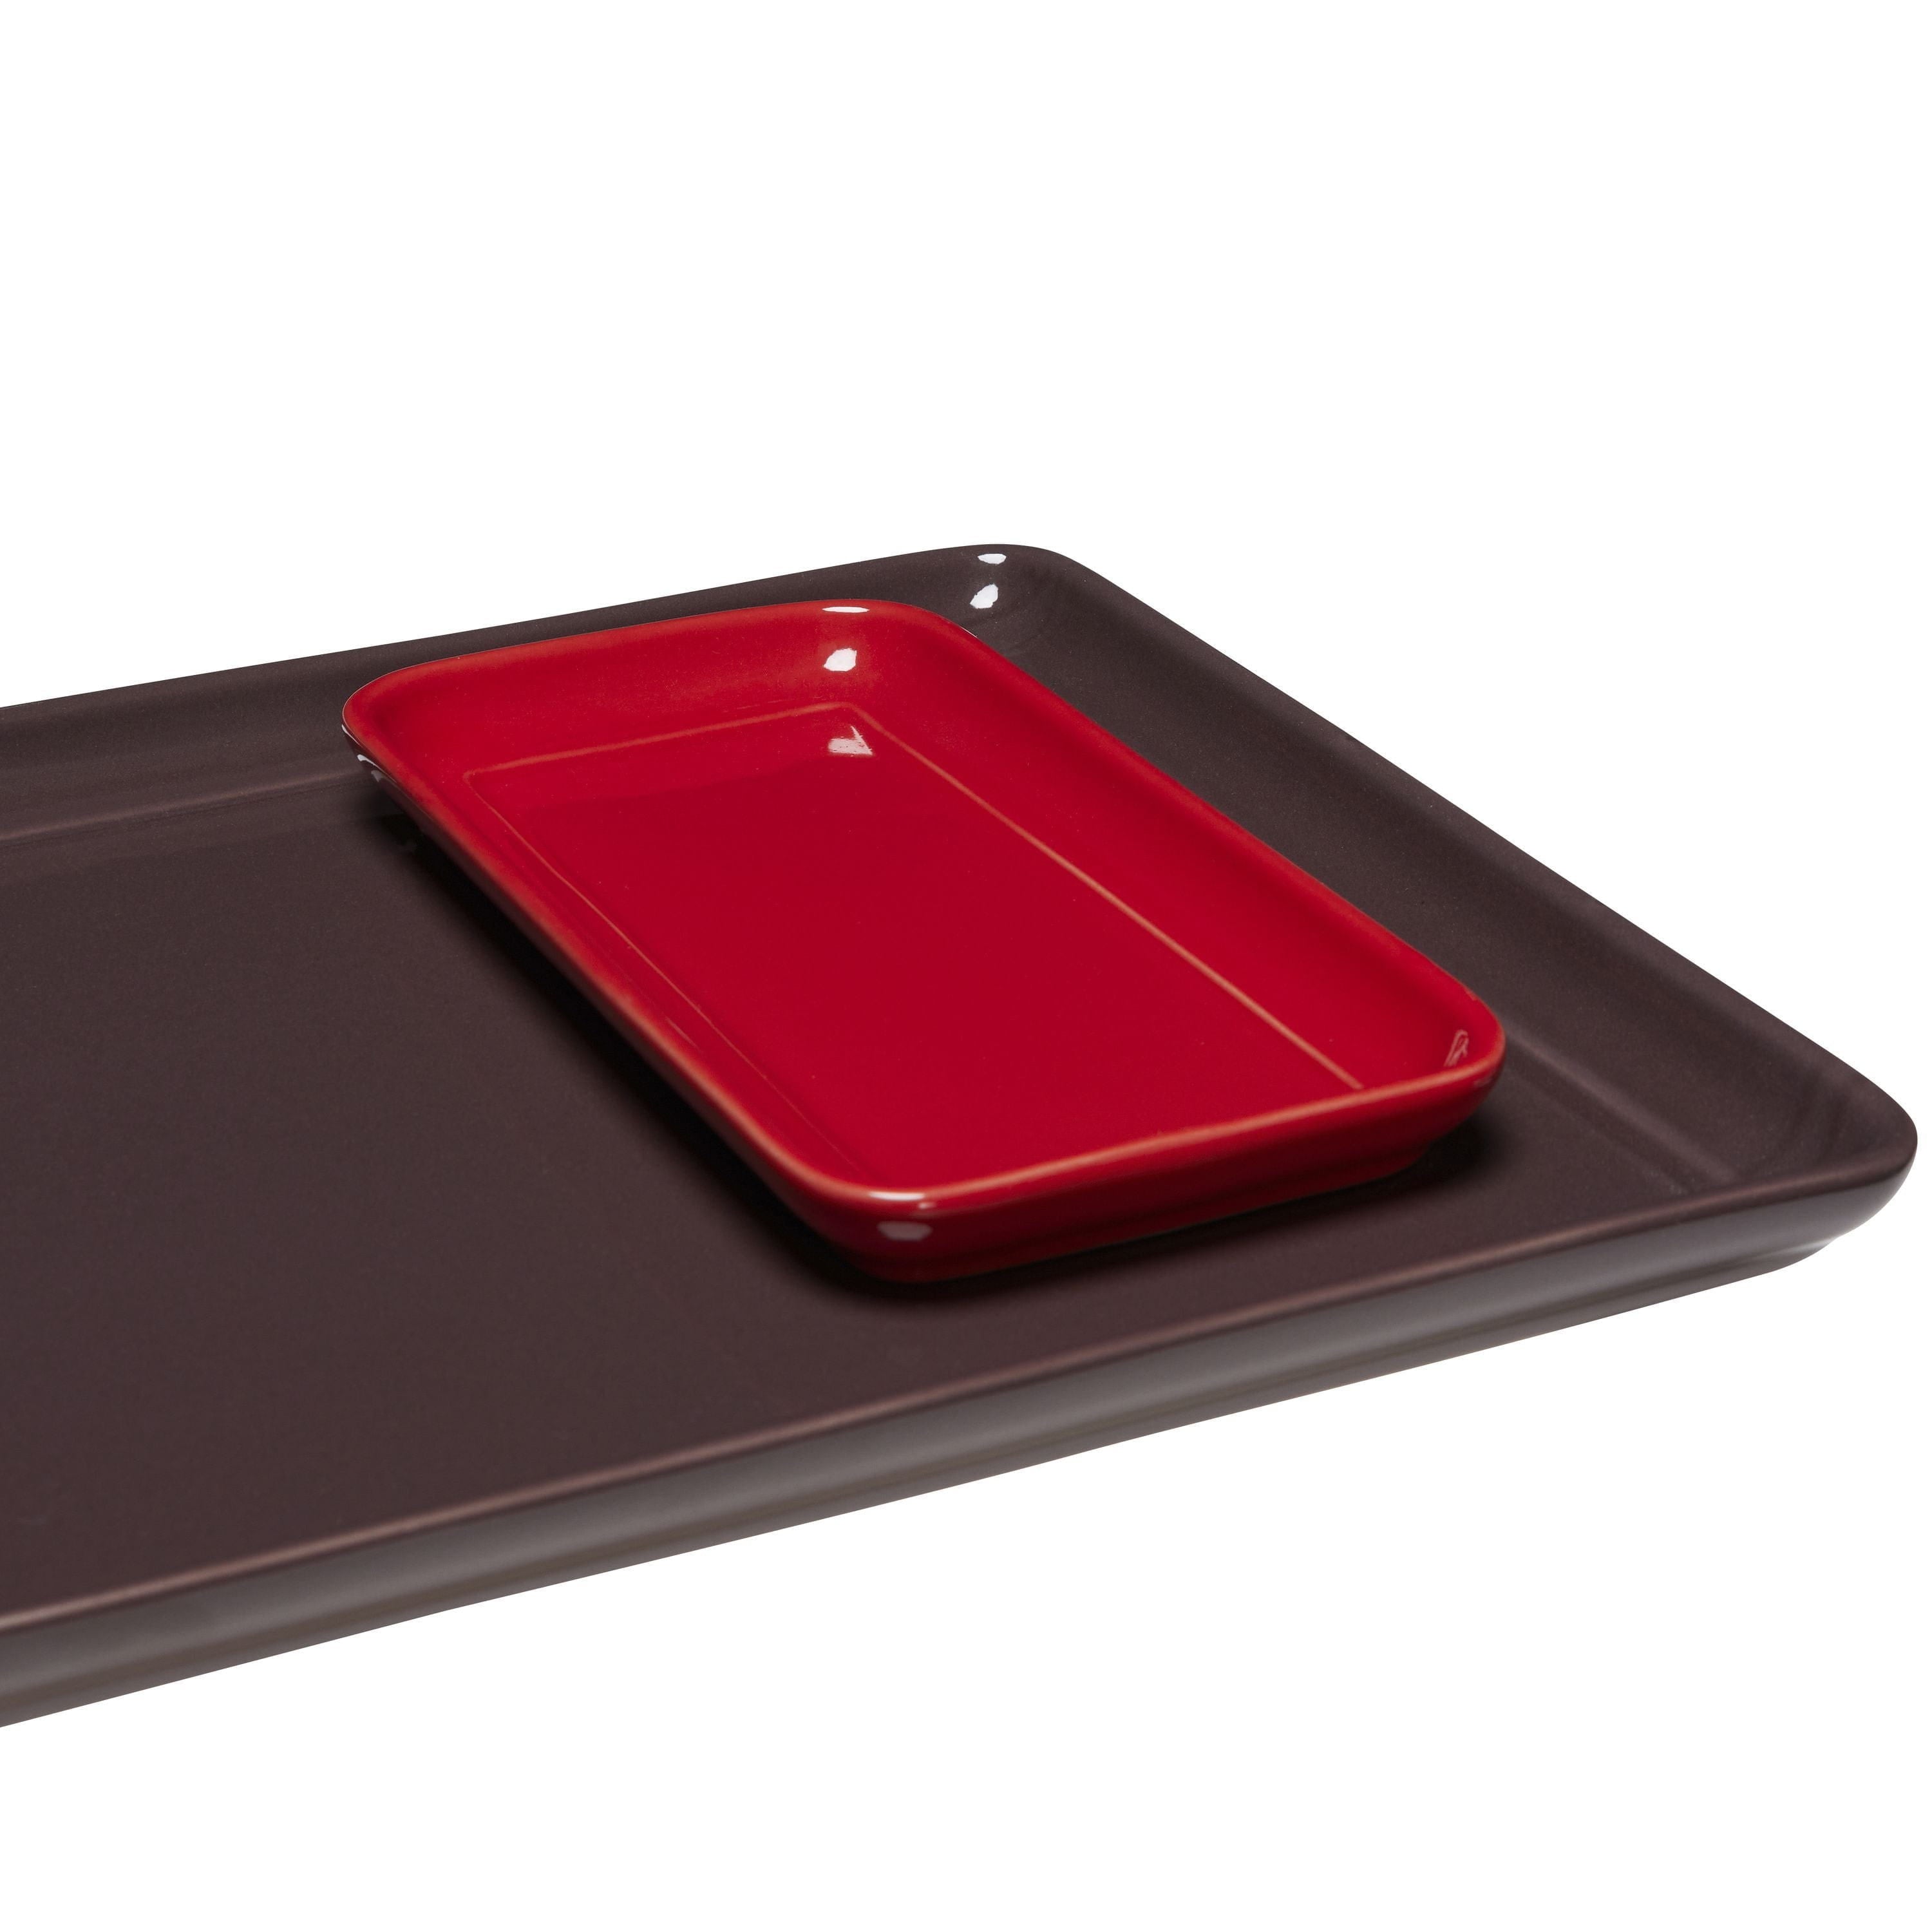 Hübsch Amare Tablett Set van 2, Bourgondië/rood